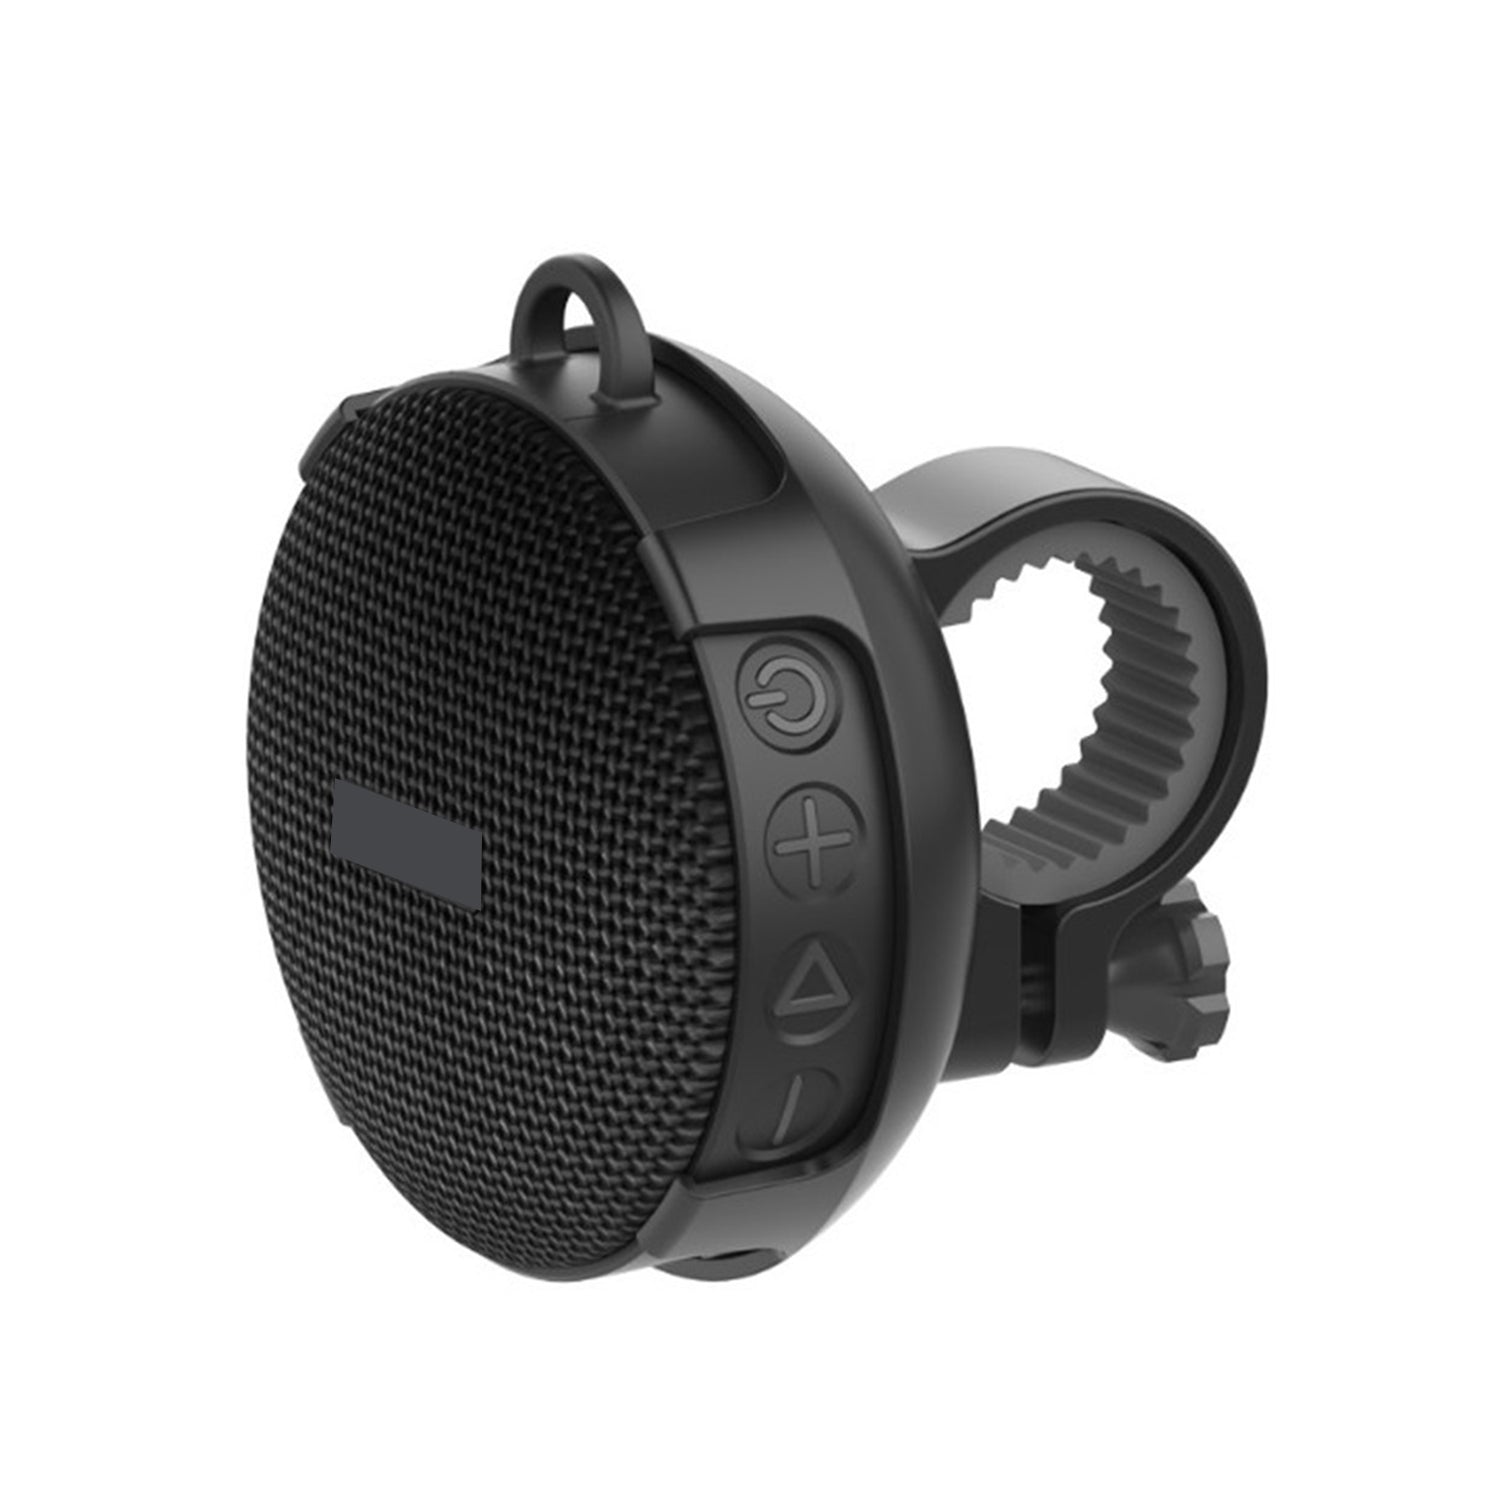 Outdoor waterproof riding car portable Bluetooth speaker